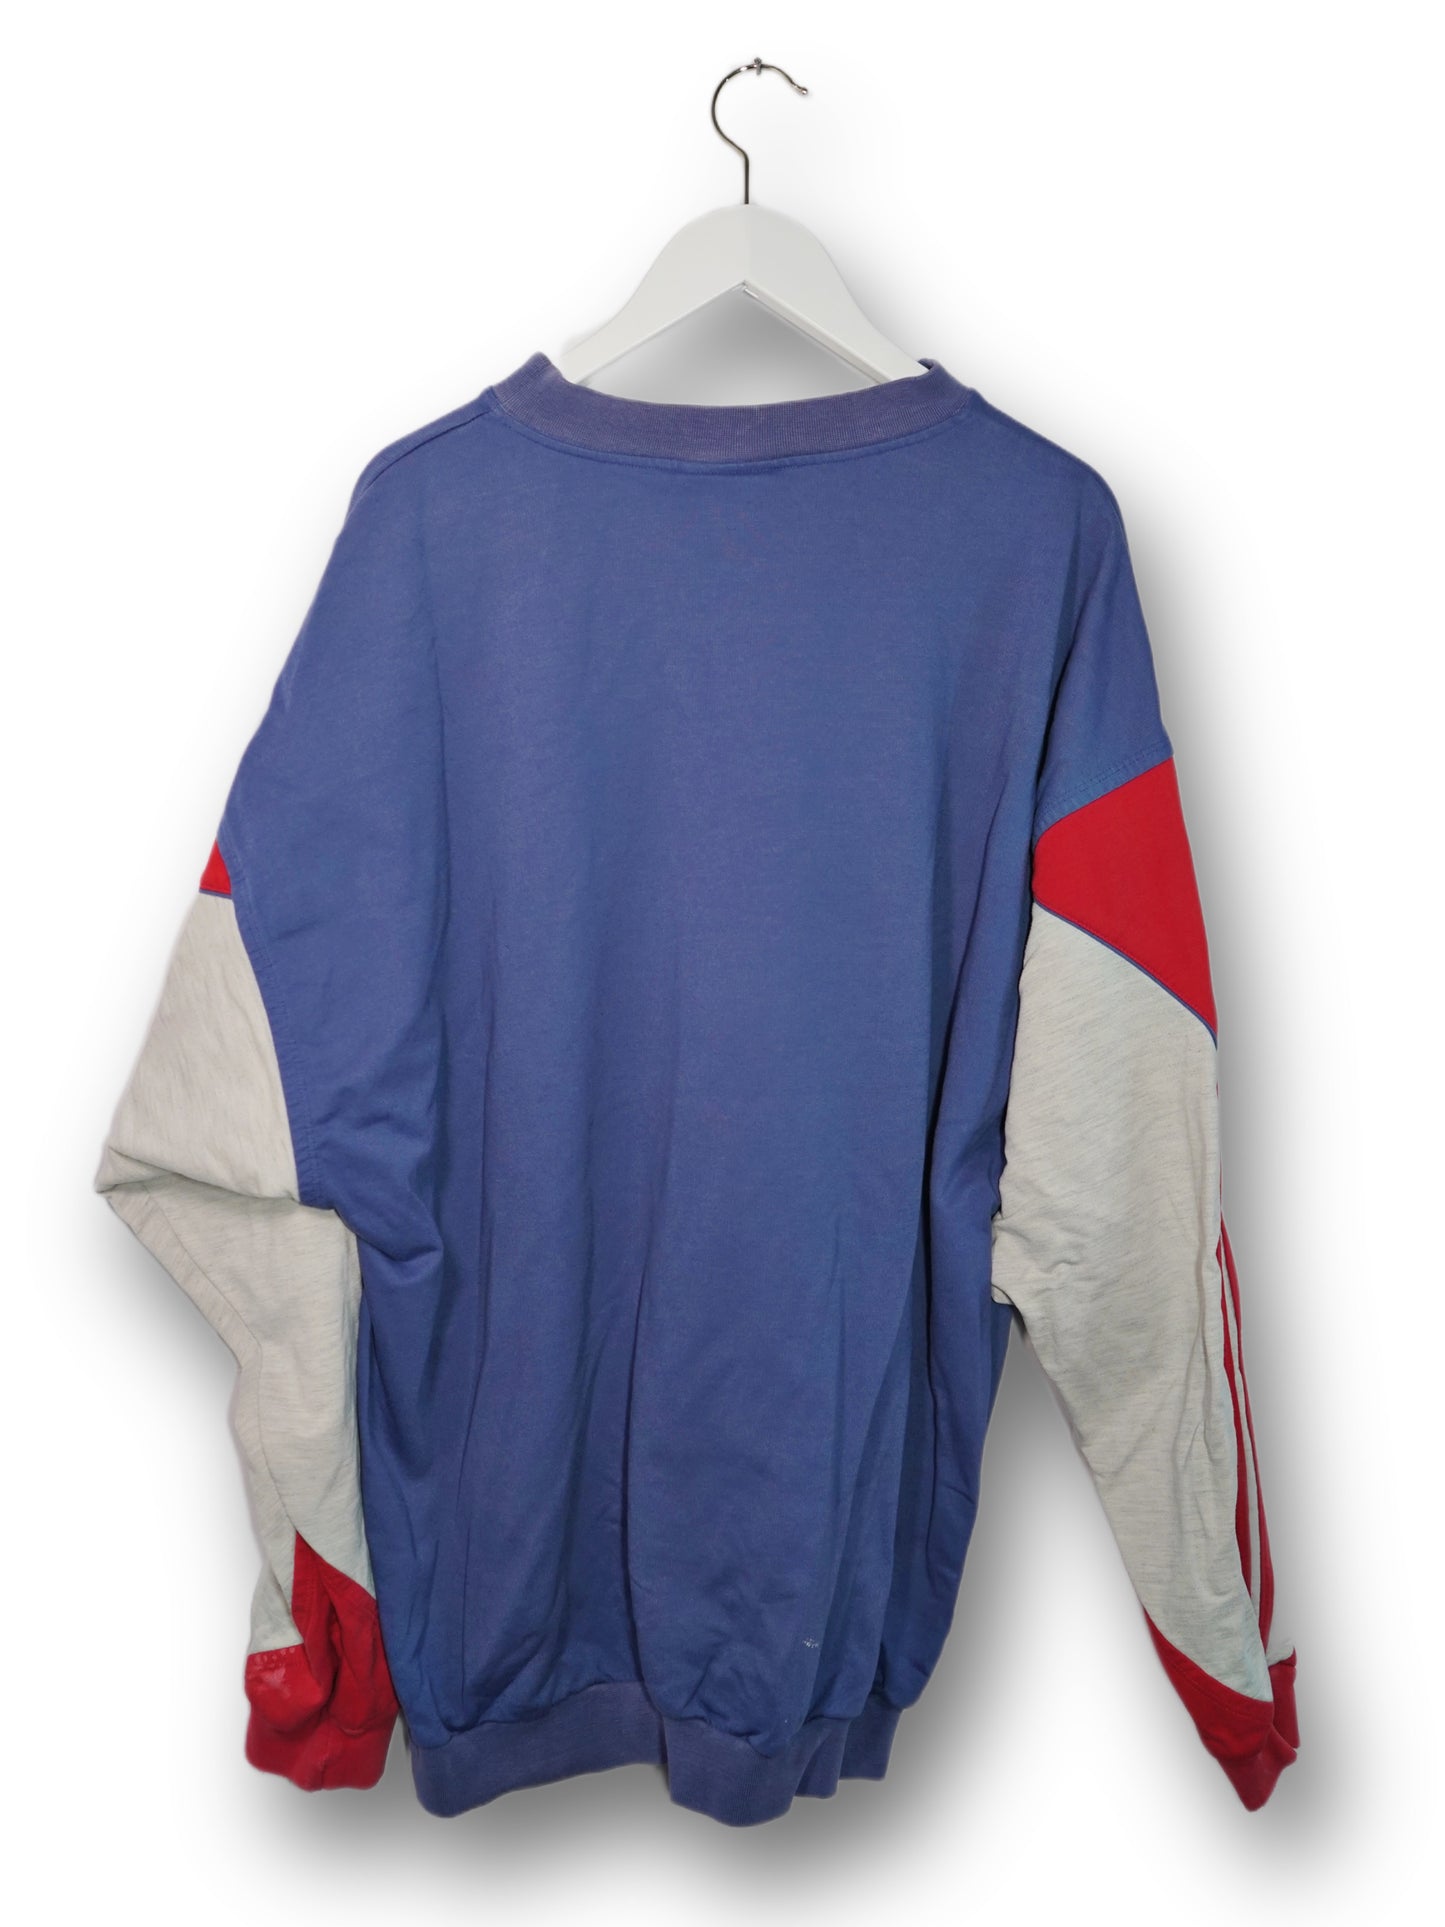 Adidas Vintage Sweater Blau Rot Grau